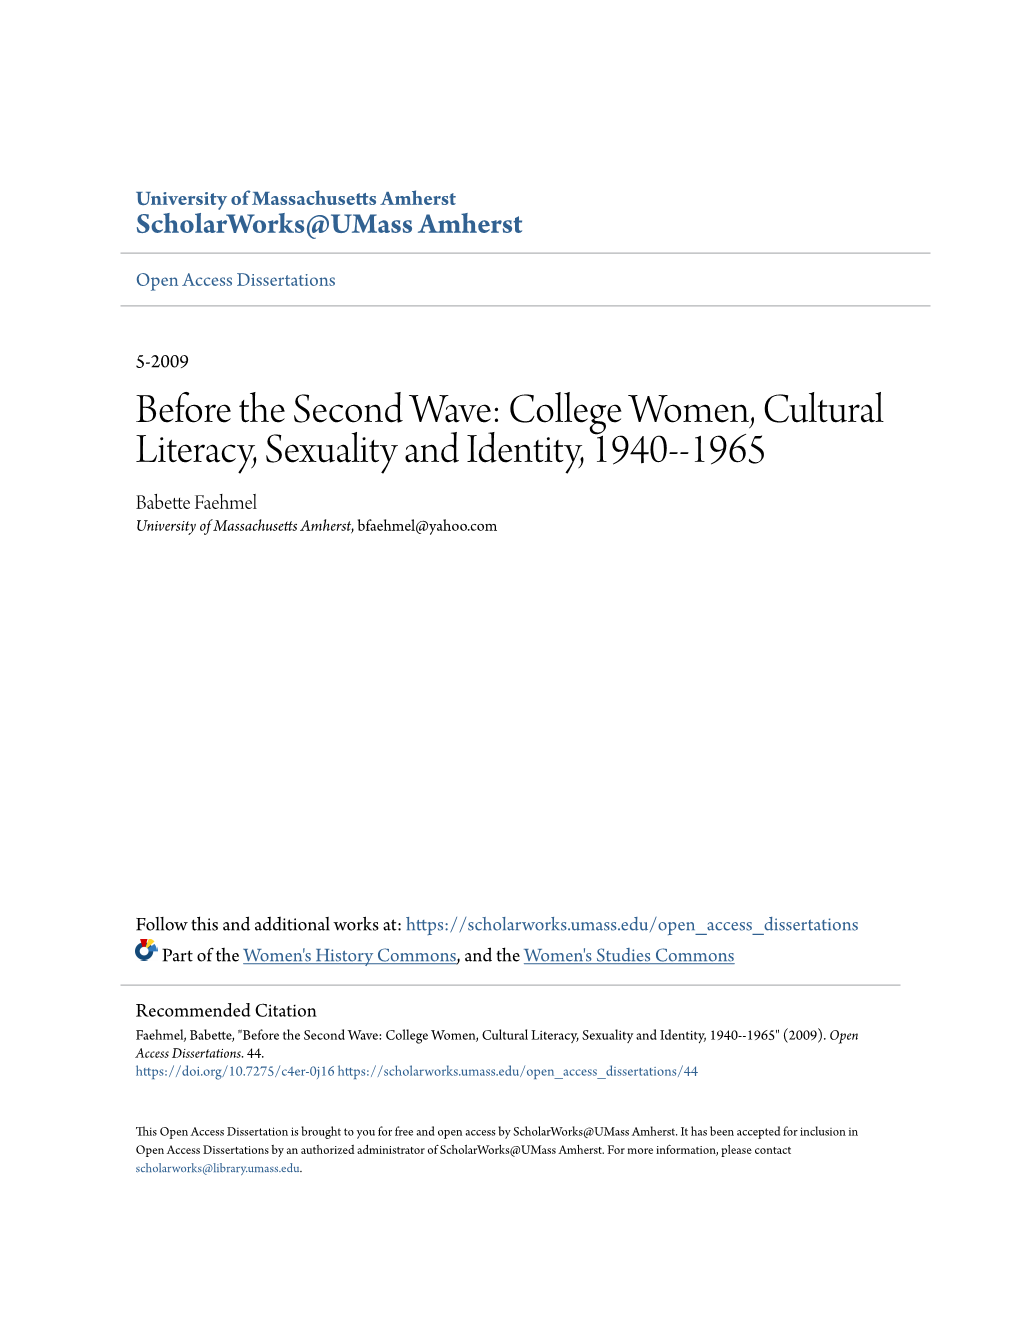 College Women, Cultural Literacy, Sexuality and Identity, 1940--1965 Babette Faehmel University of Massachusetts Amherst, Bfaehmel@Yahoo.Com